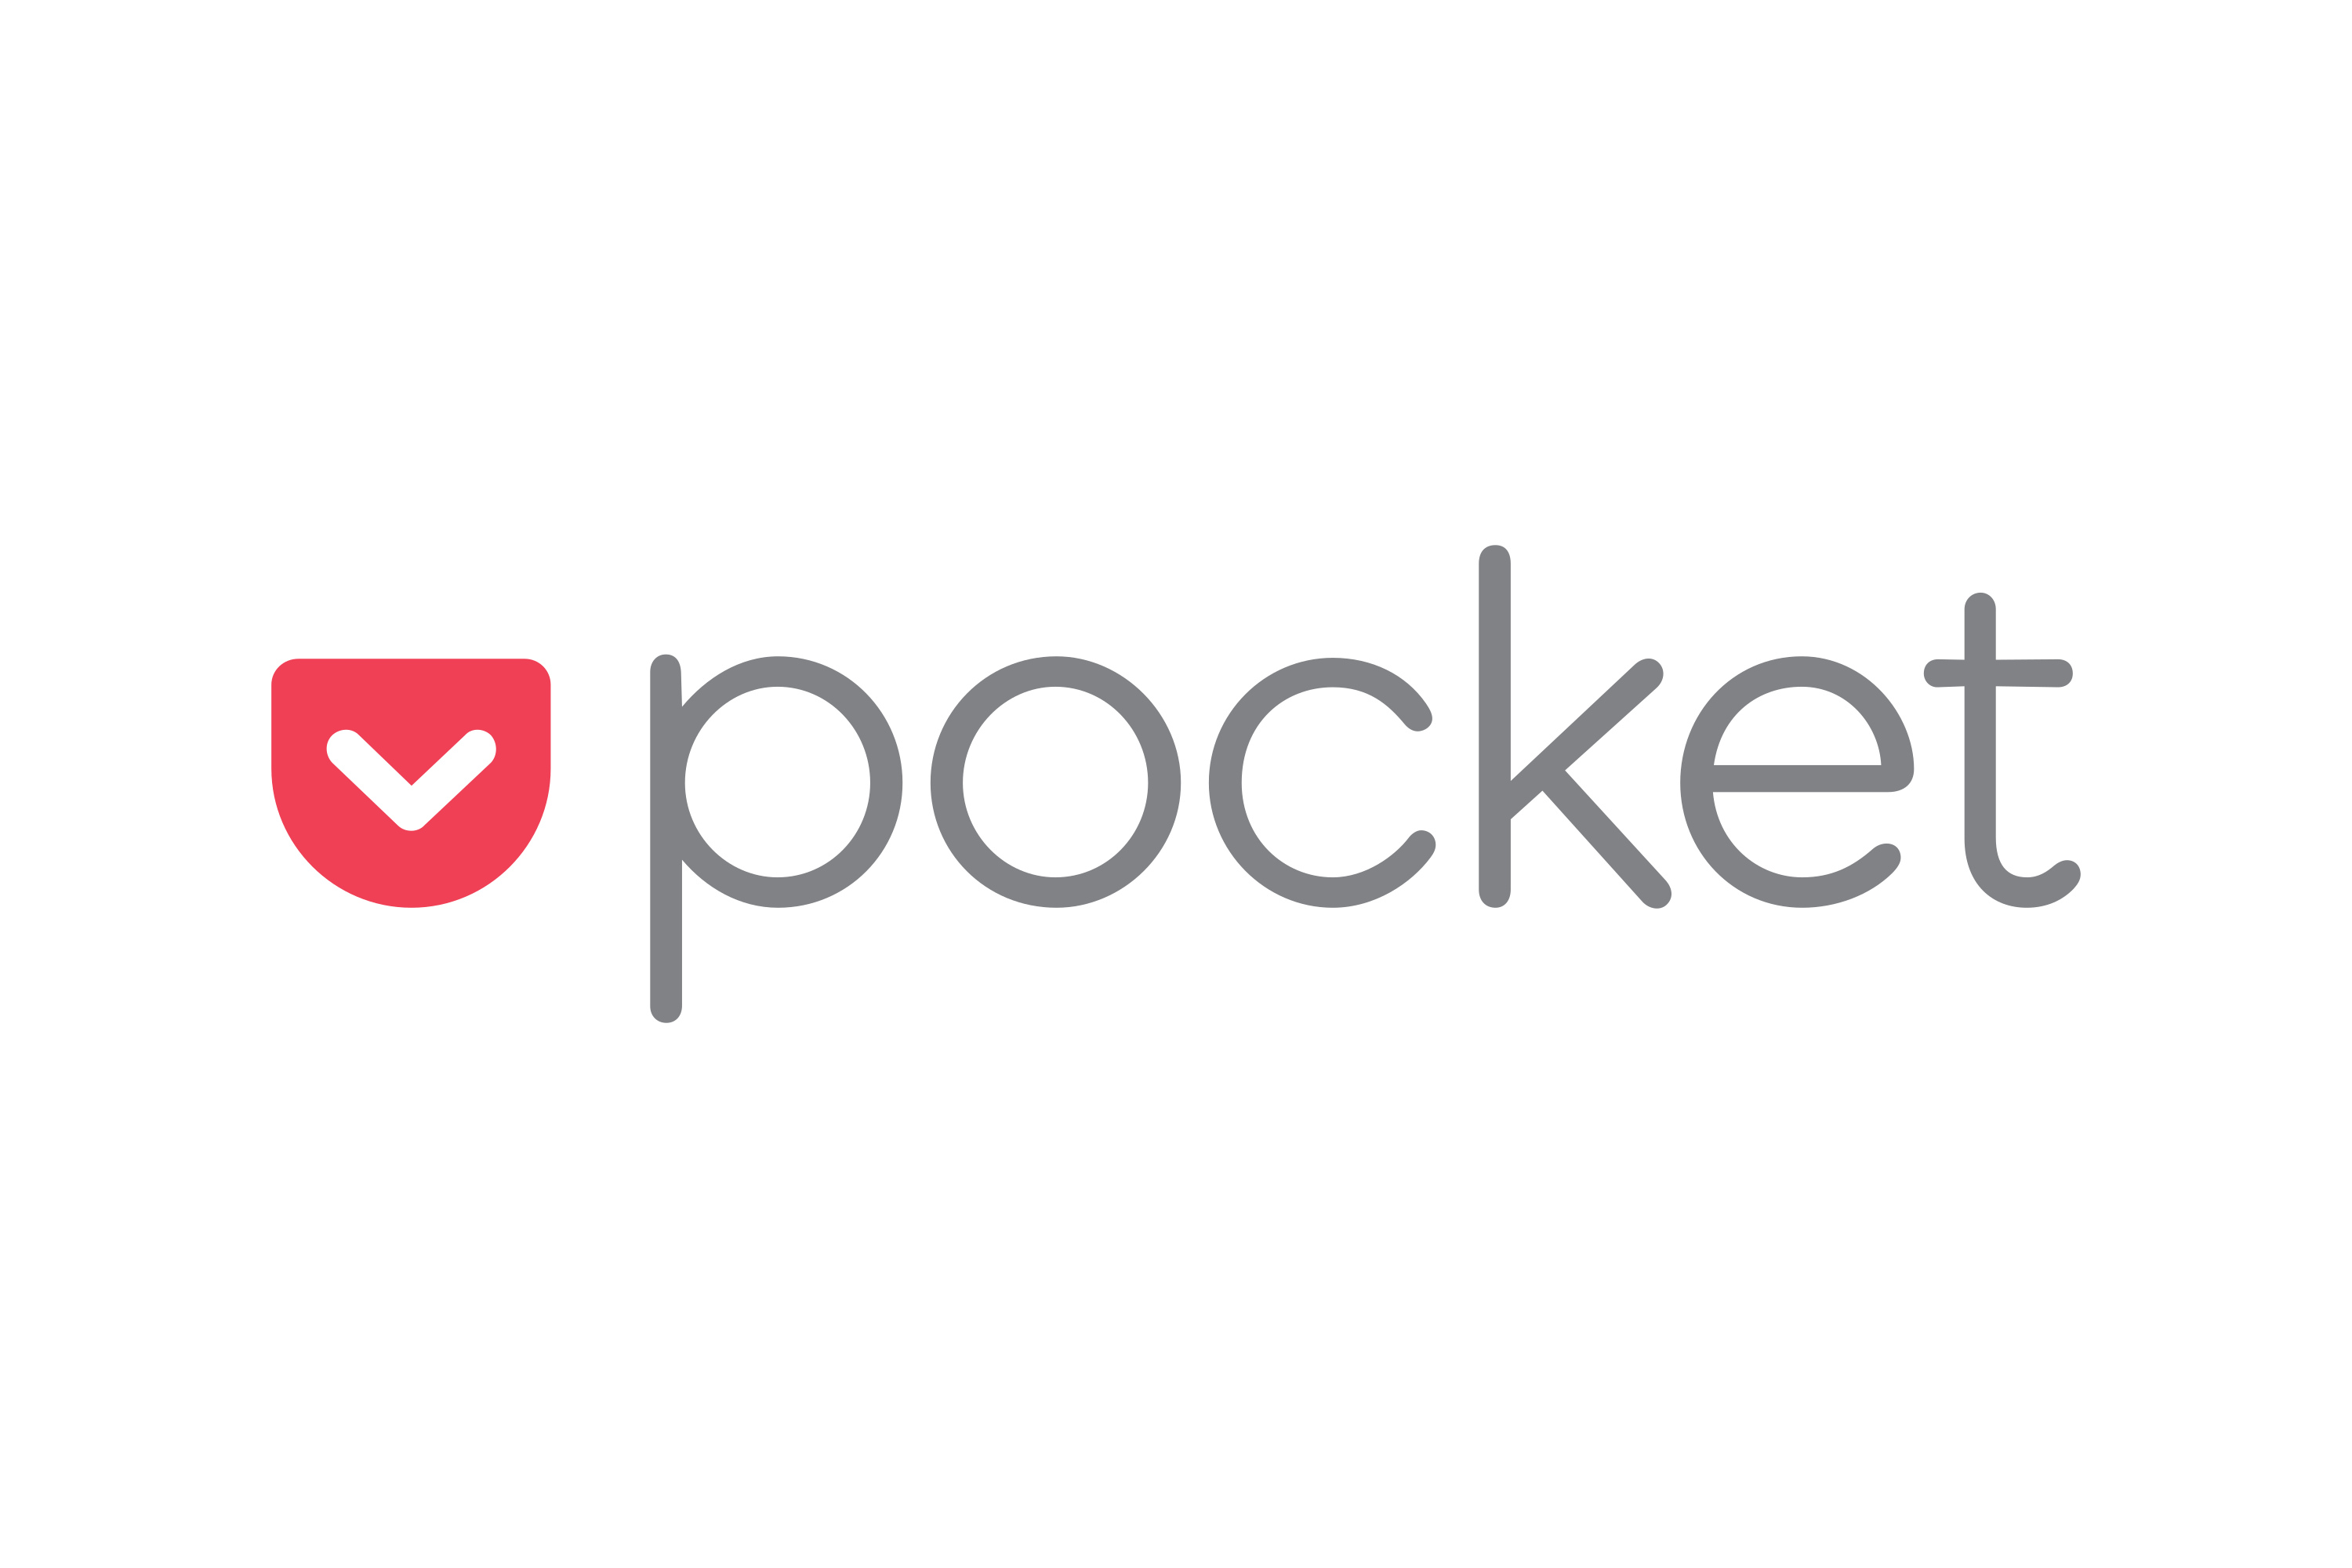 Hot Pockets Logo Transparent 